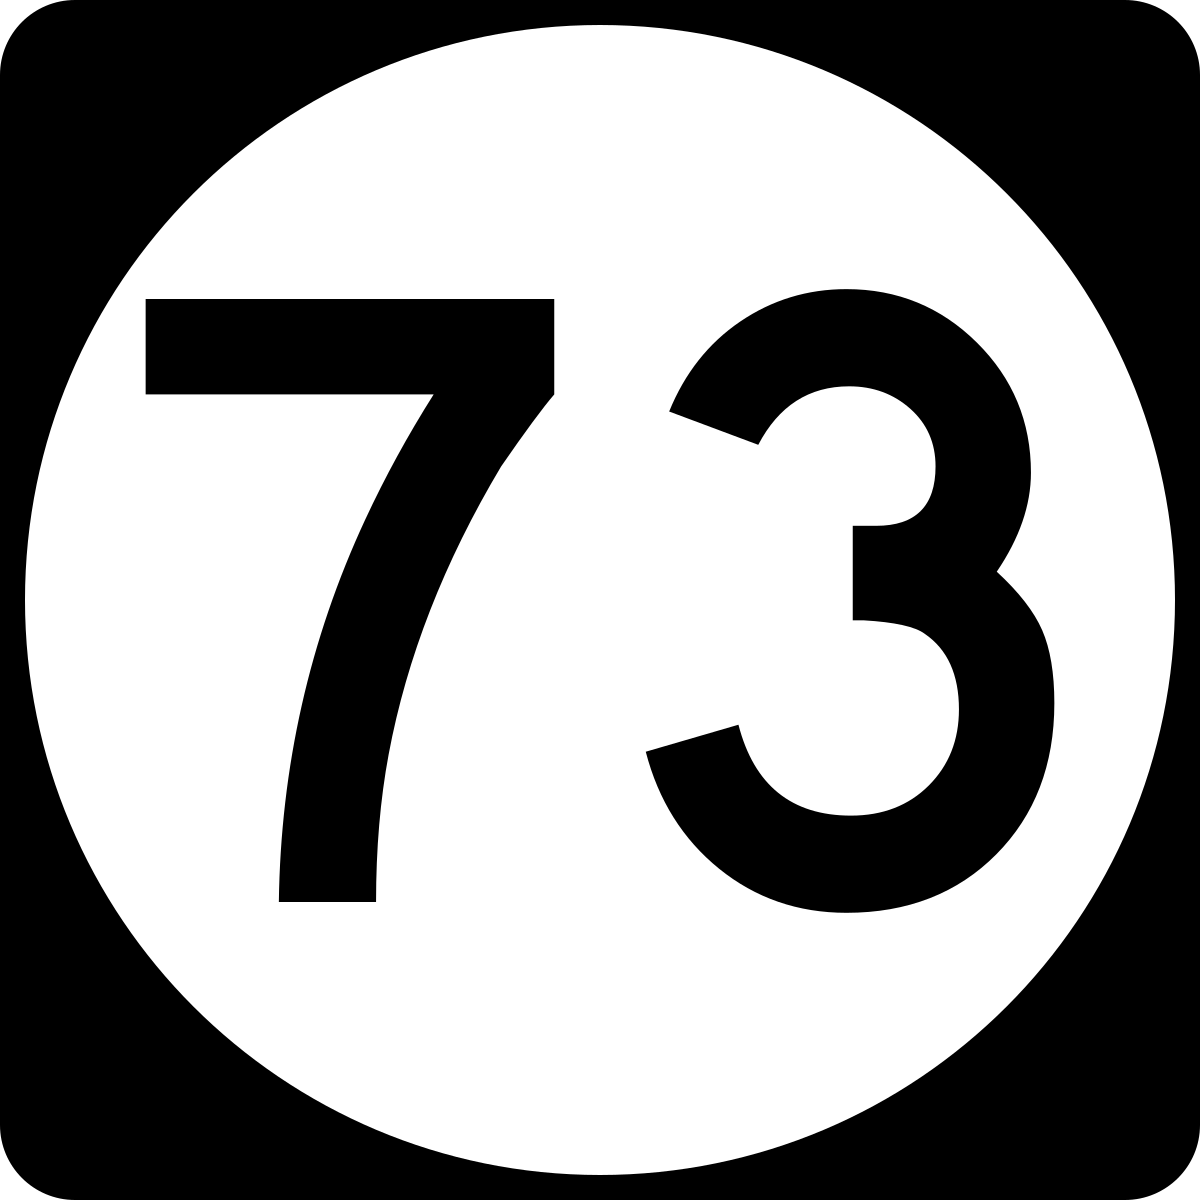 File:Circle sign 73.svg - Wikipedia